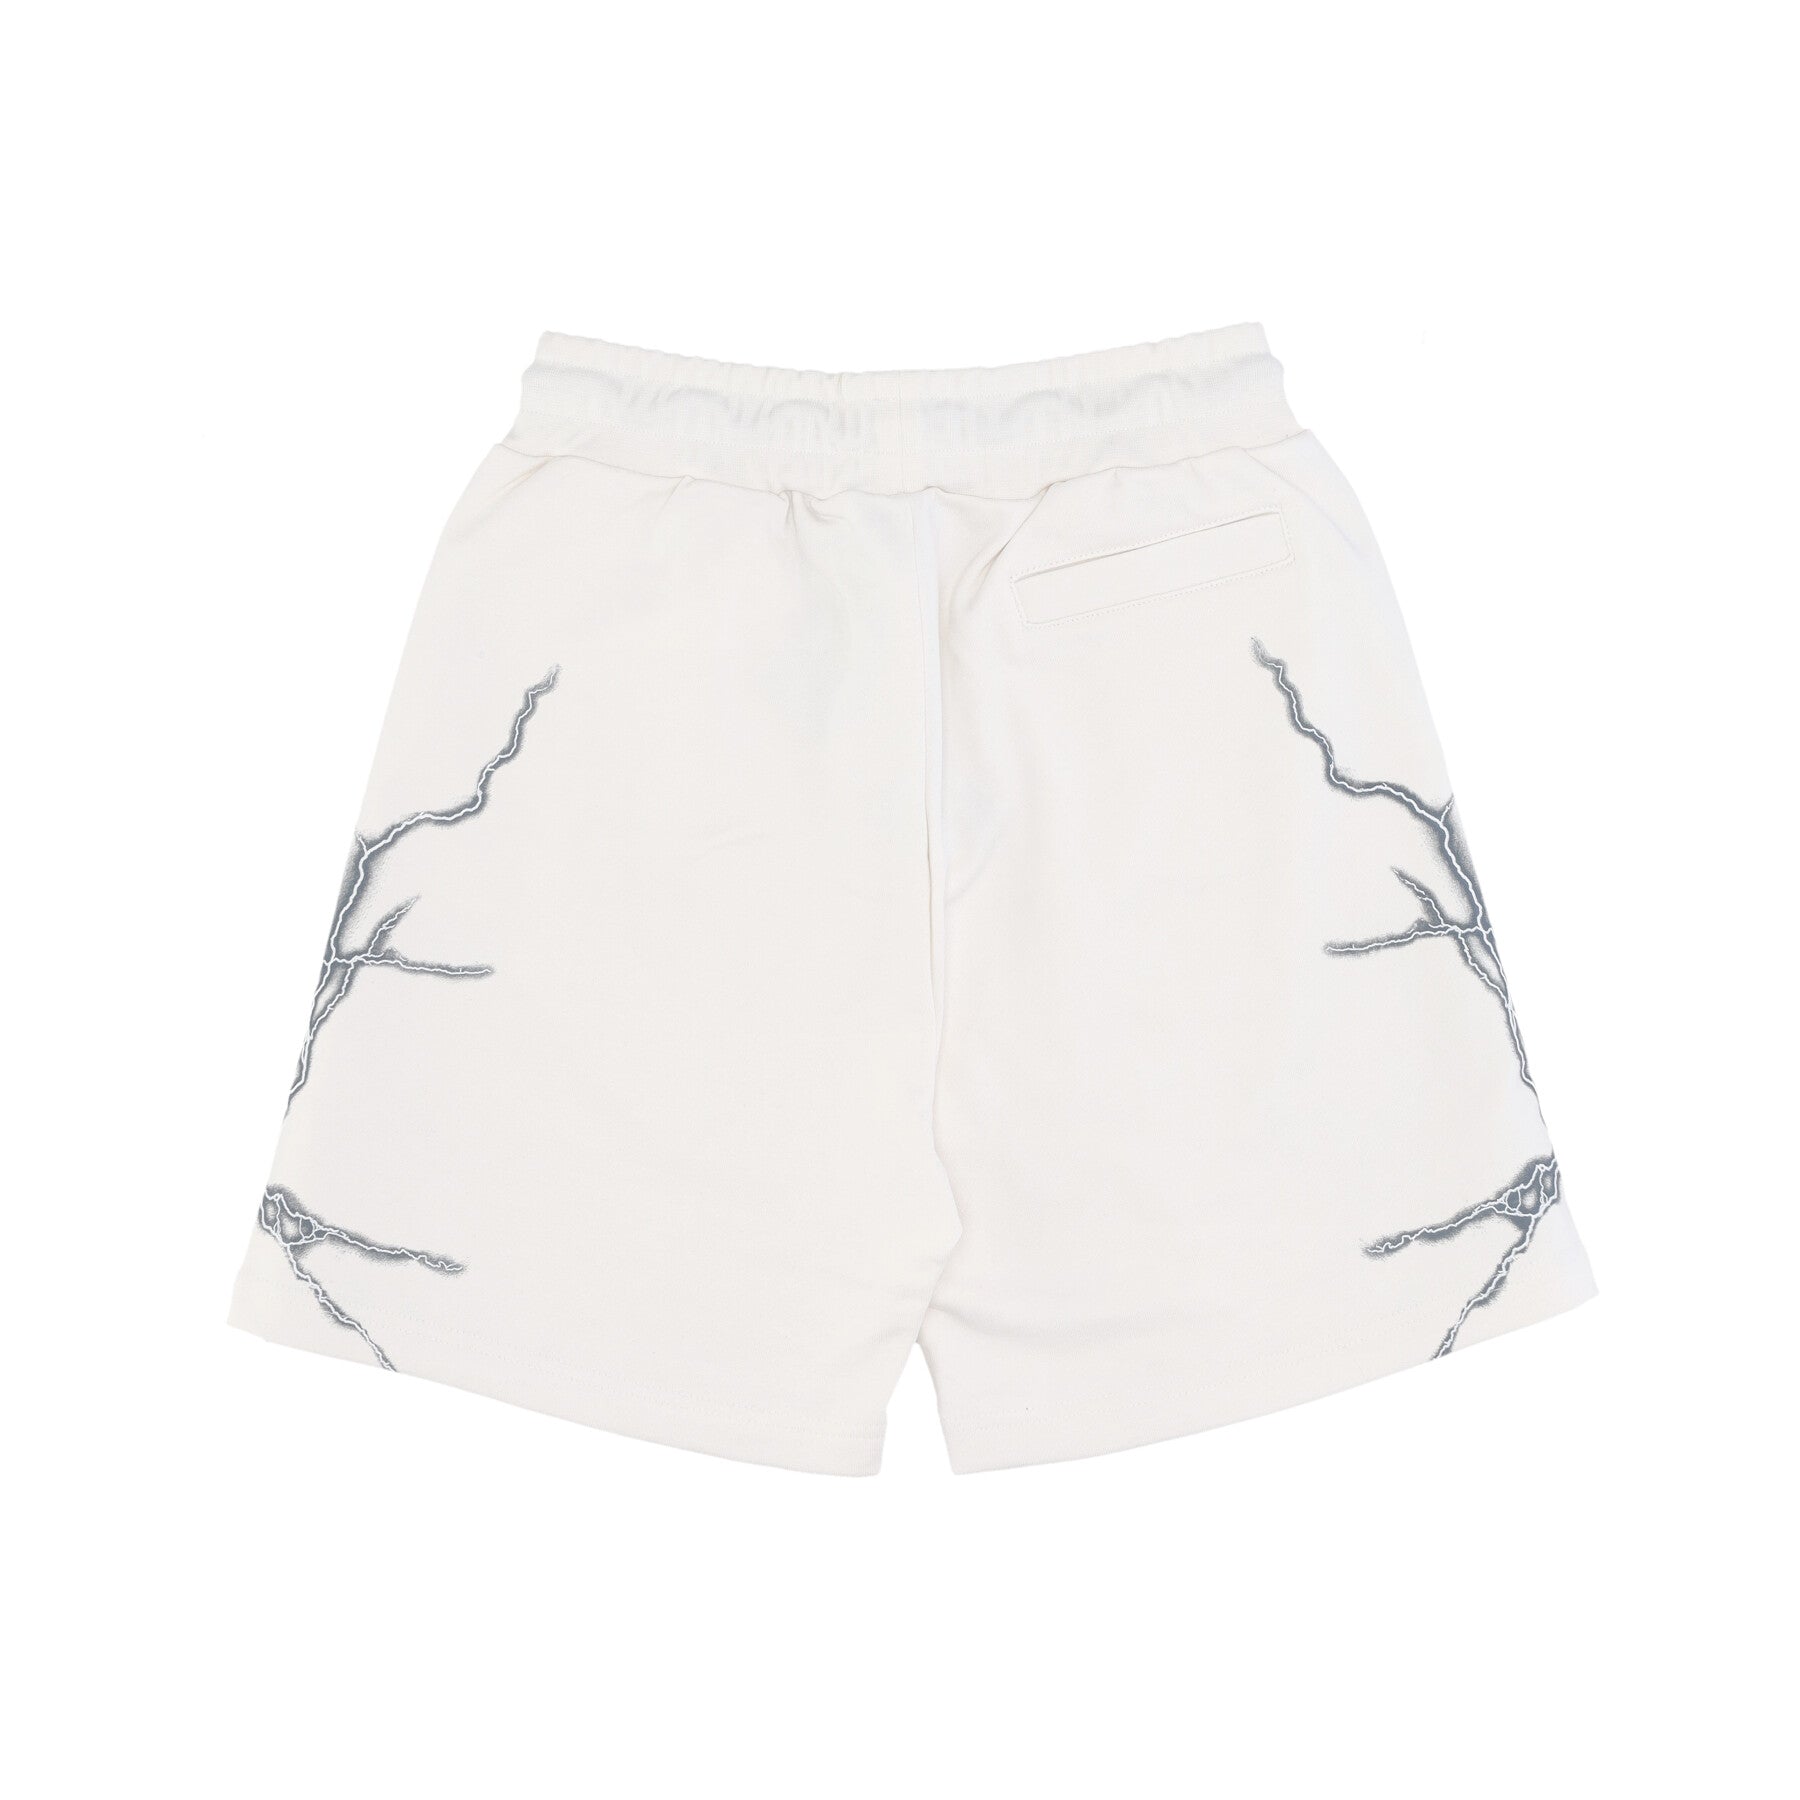 Pantalone Tuta Leggero Uomo Lateral Lightning Print Shorts White/grey PH00568